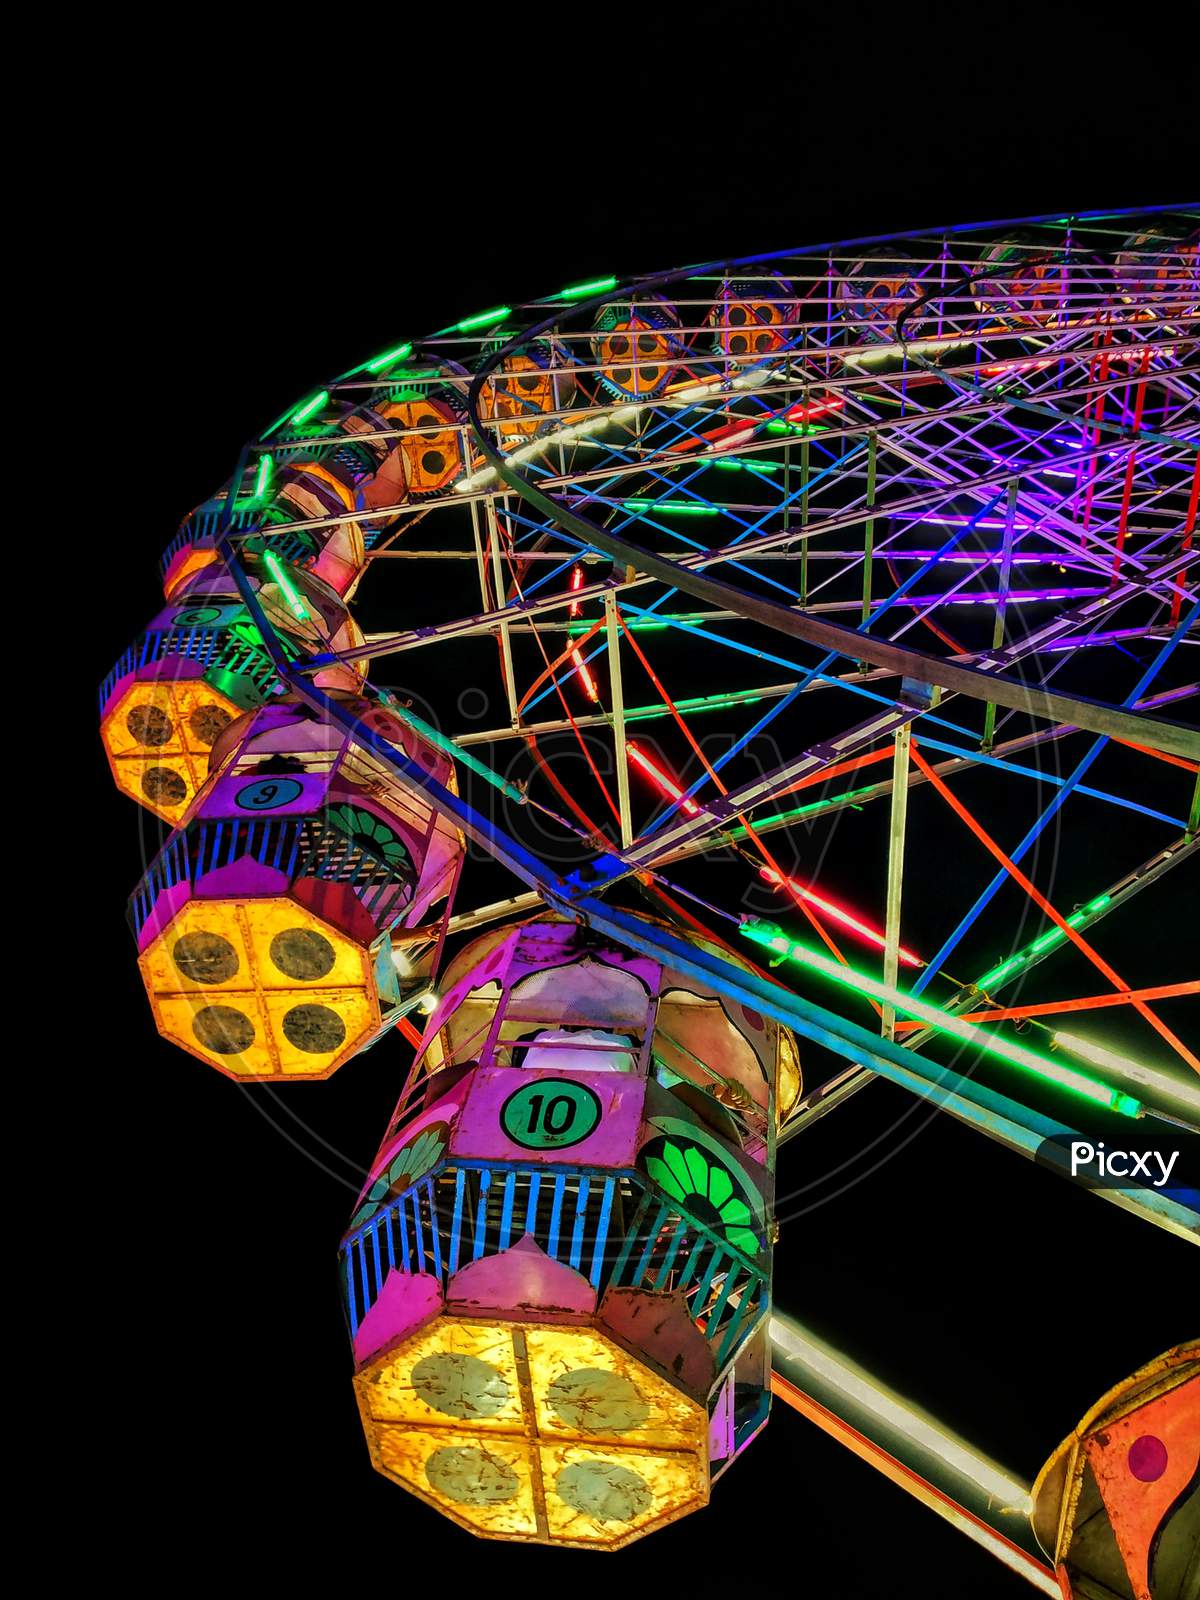 A Colourful Giant Wheel With Lights At A Fair Near A Beach.